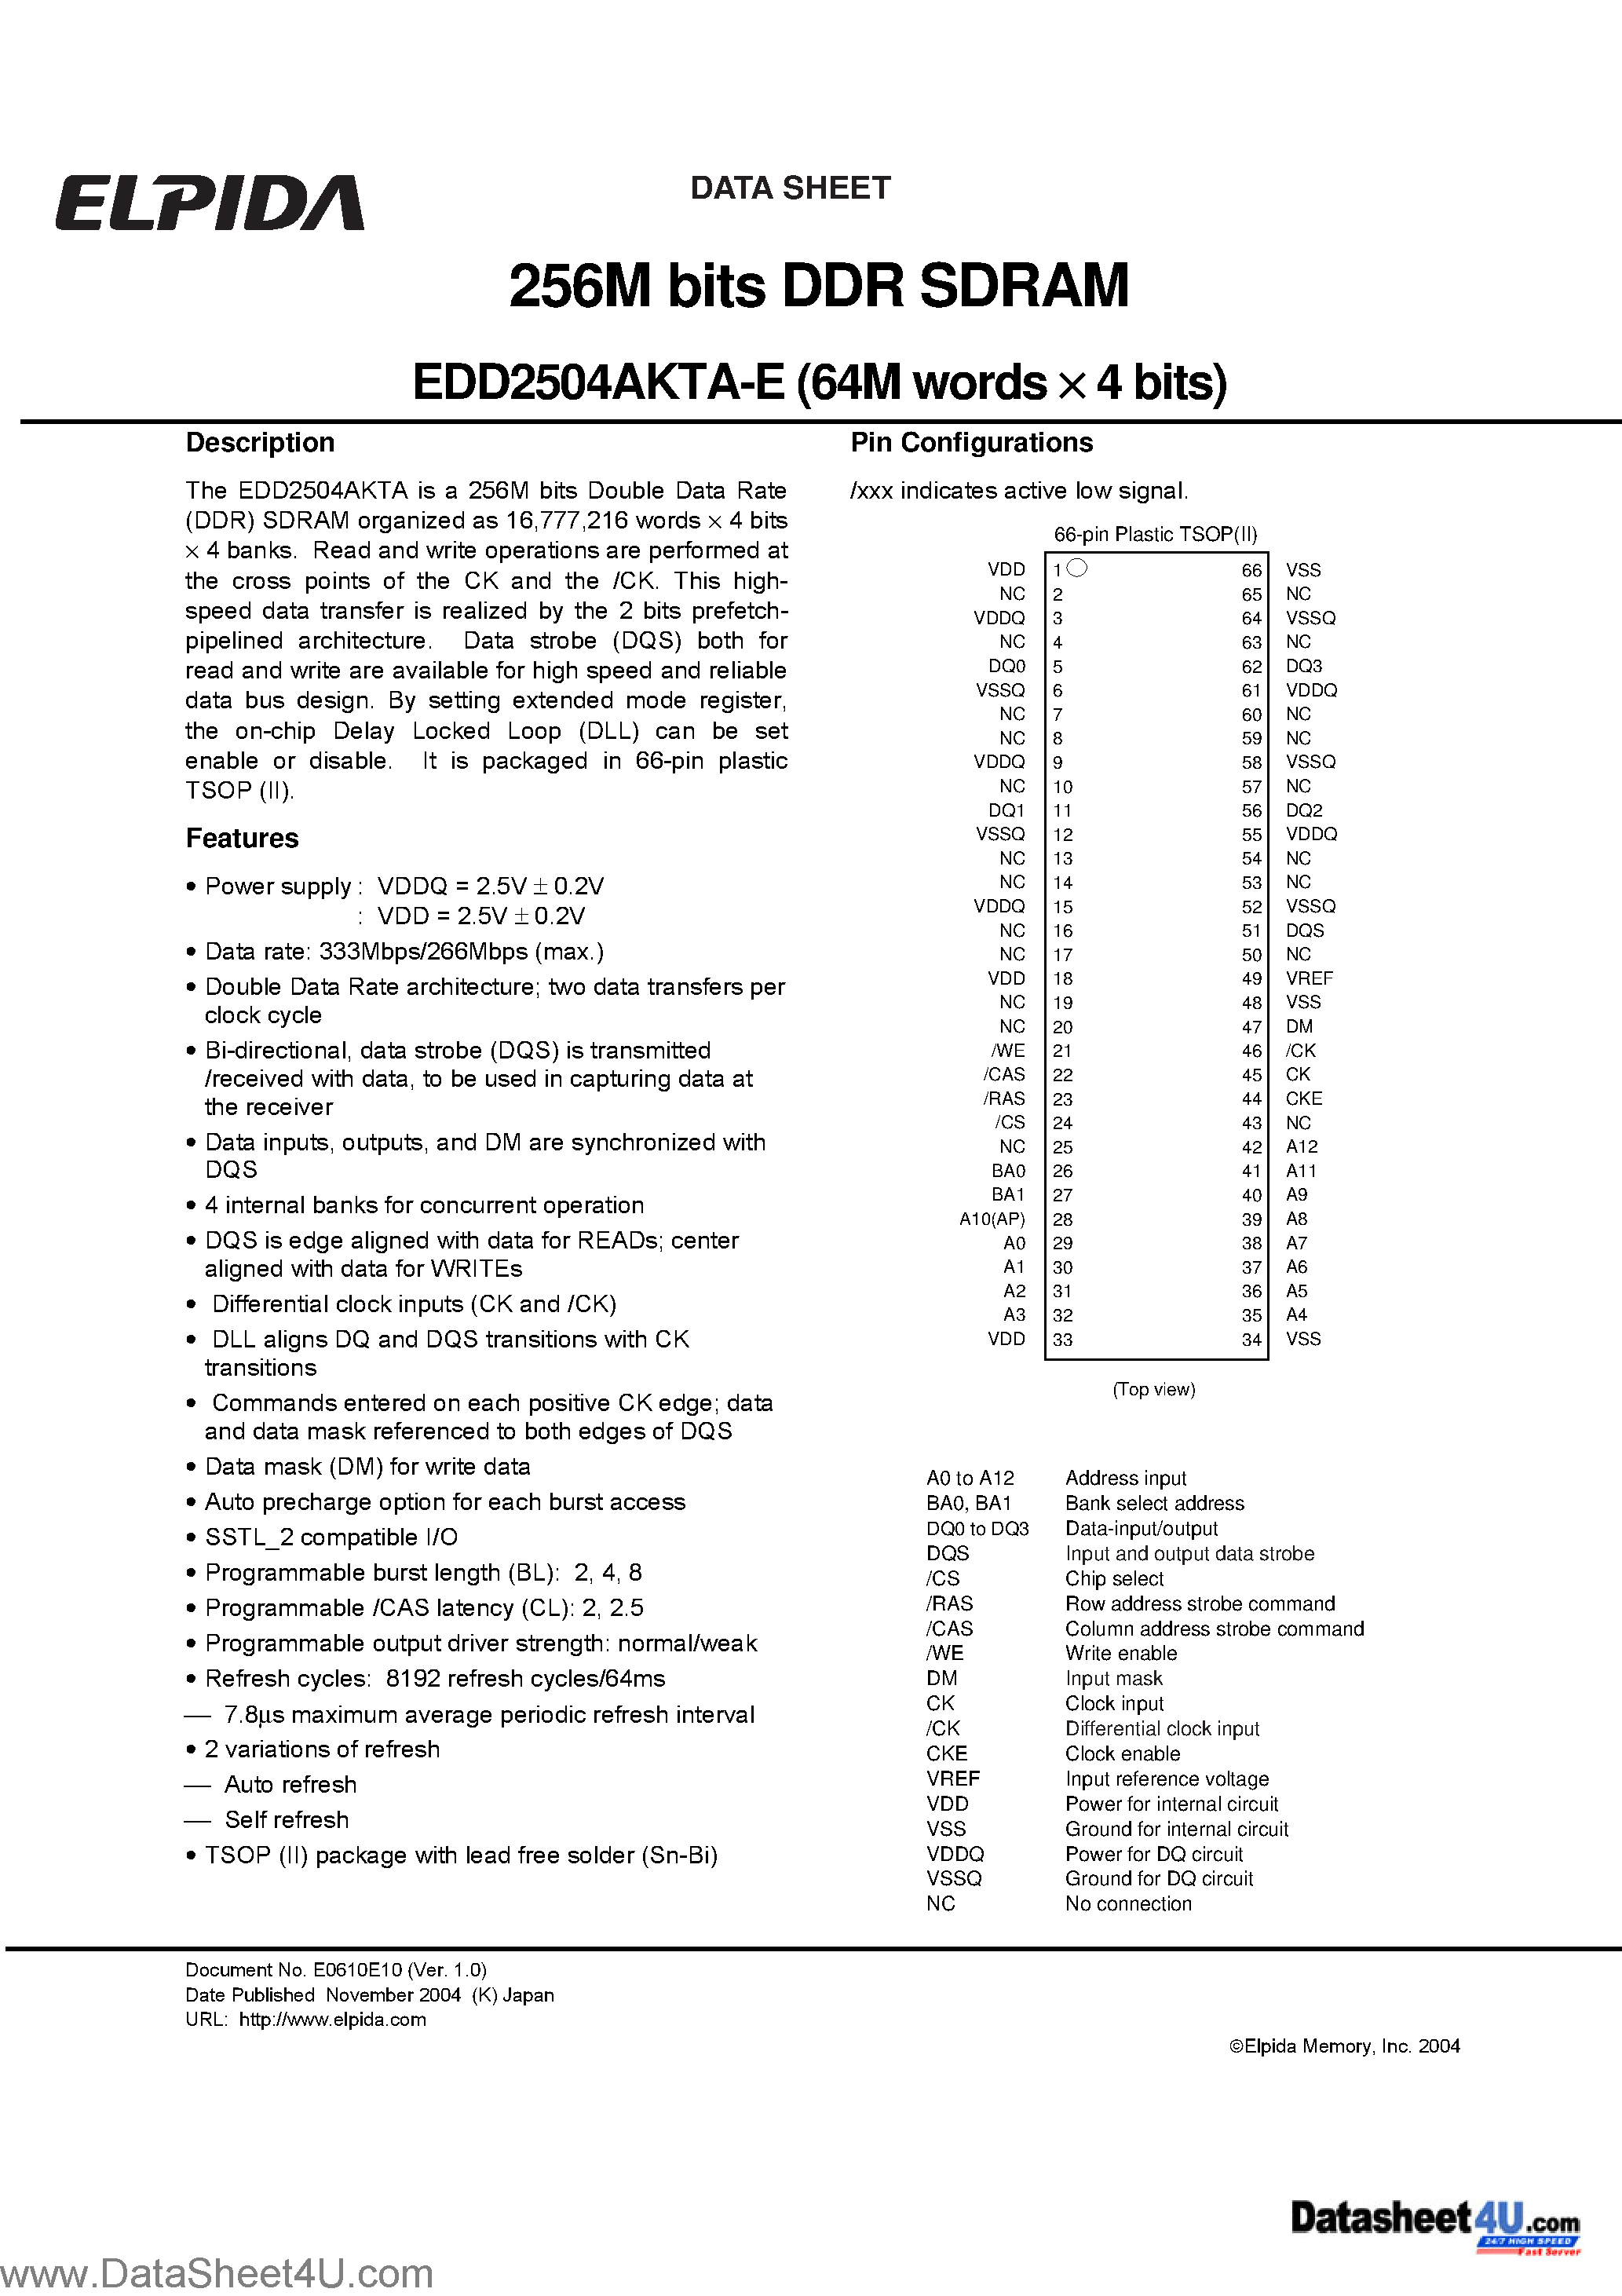 Datasheet EDD2504AKTA-E - 256M bits DDR SDRAM (64M words x 4 bits) page 1